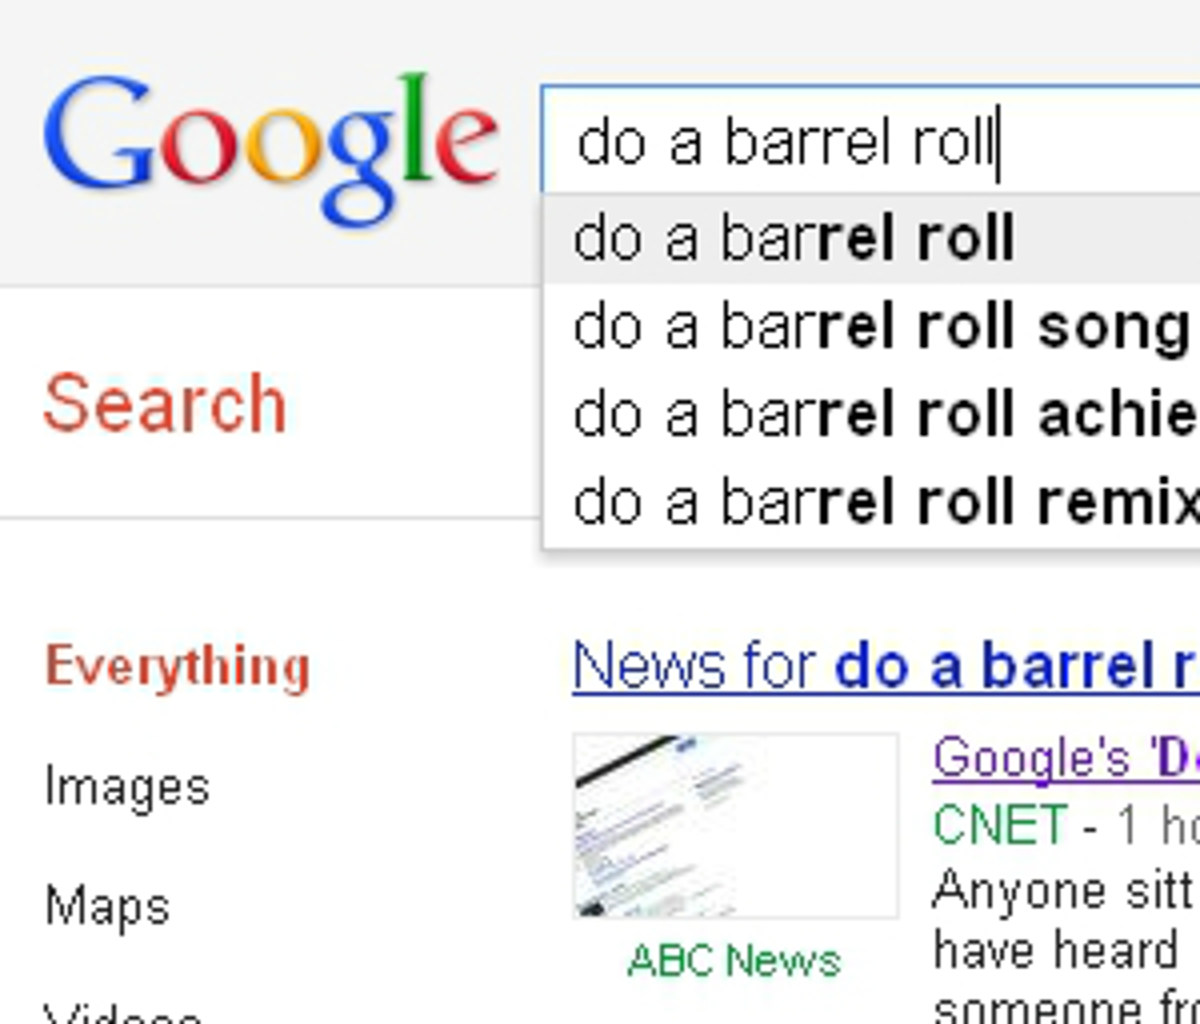 The Barrel Roll